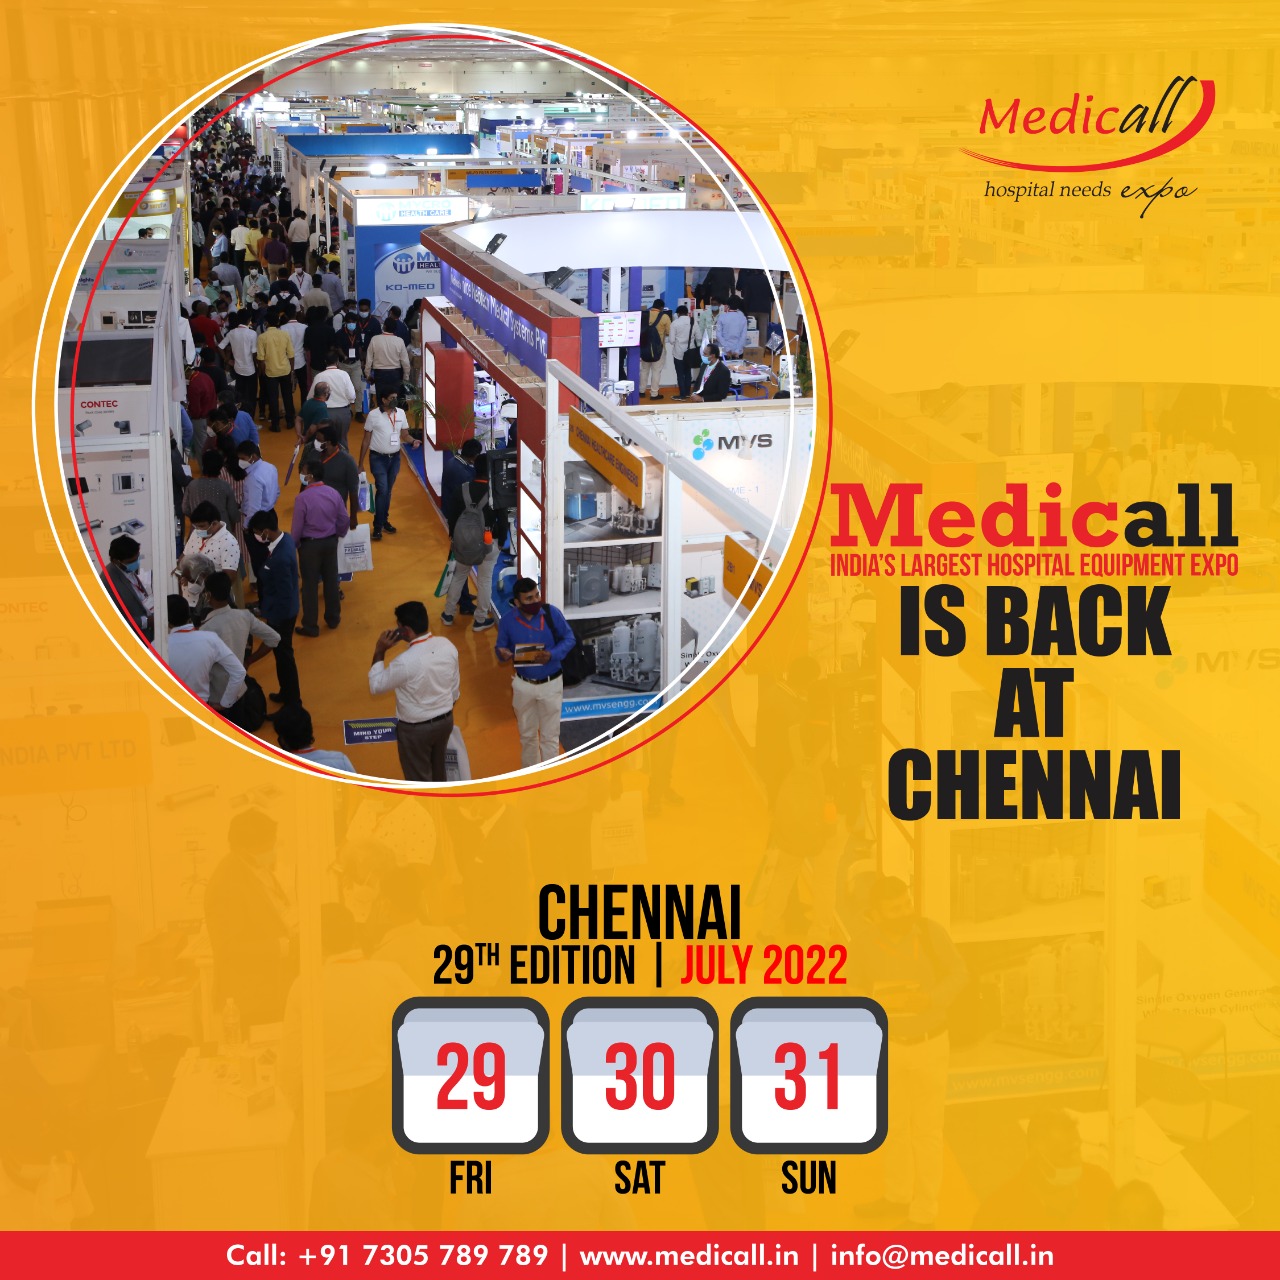 Medicall - India's Largest Hospital Equipment Expo - 29th Edition, Chennai, Tamil Nadu, India